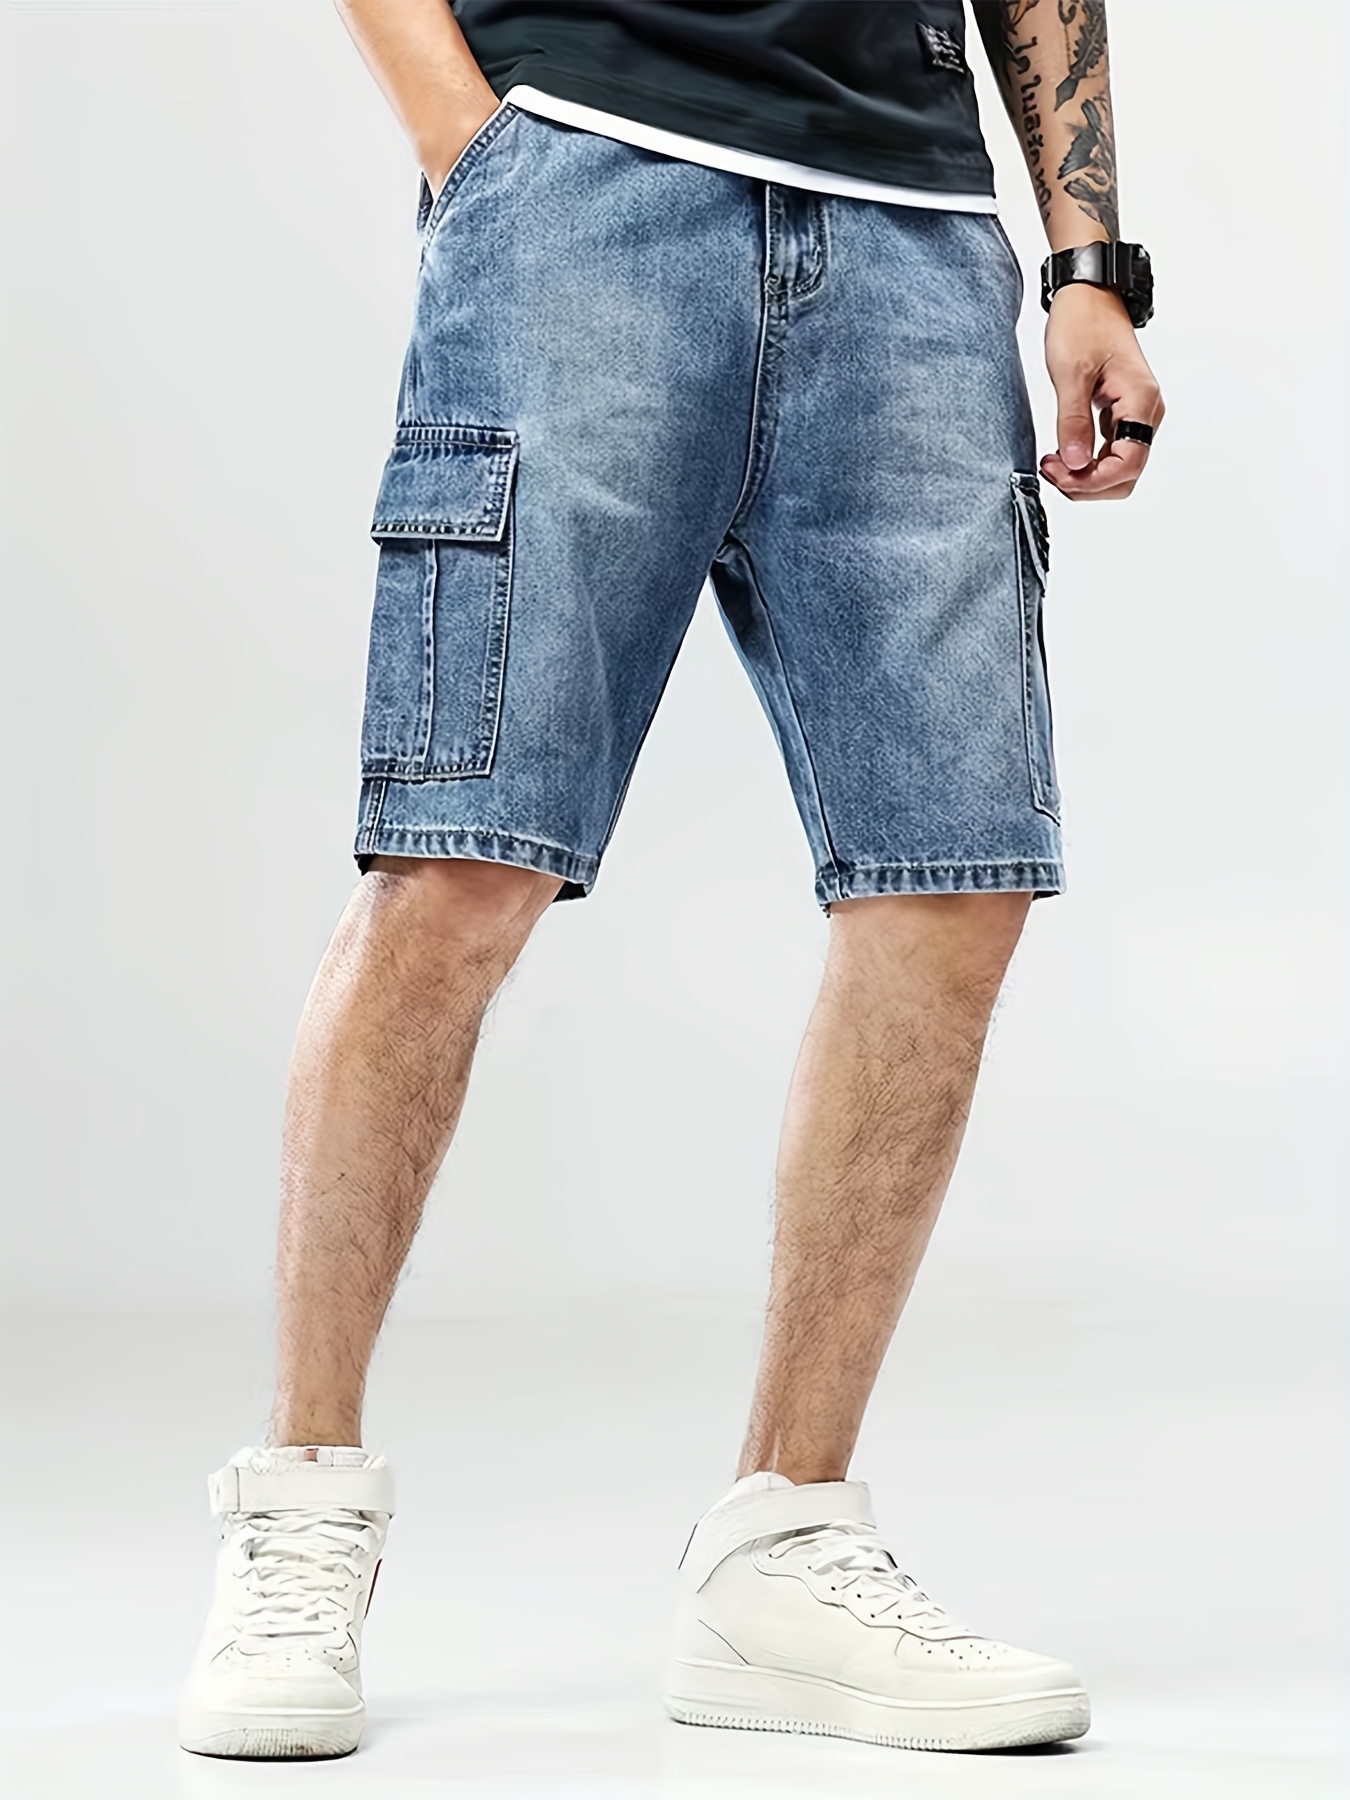 Summer Pantalón corto informal para hombre Big Size pantalones